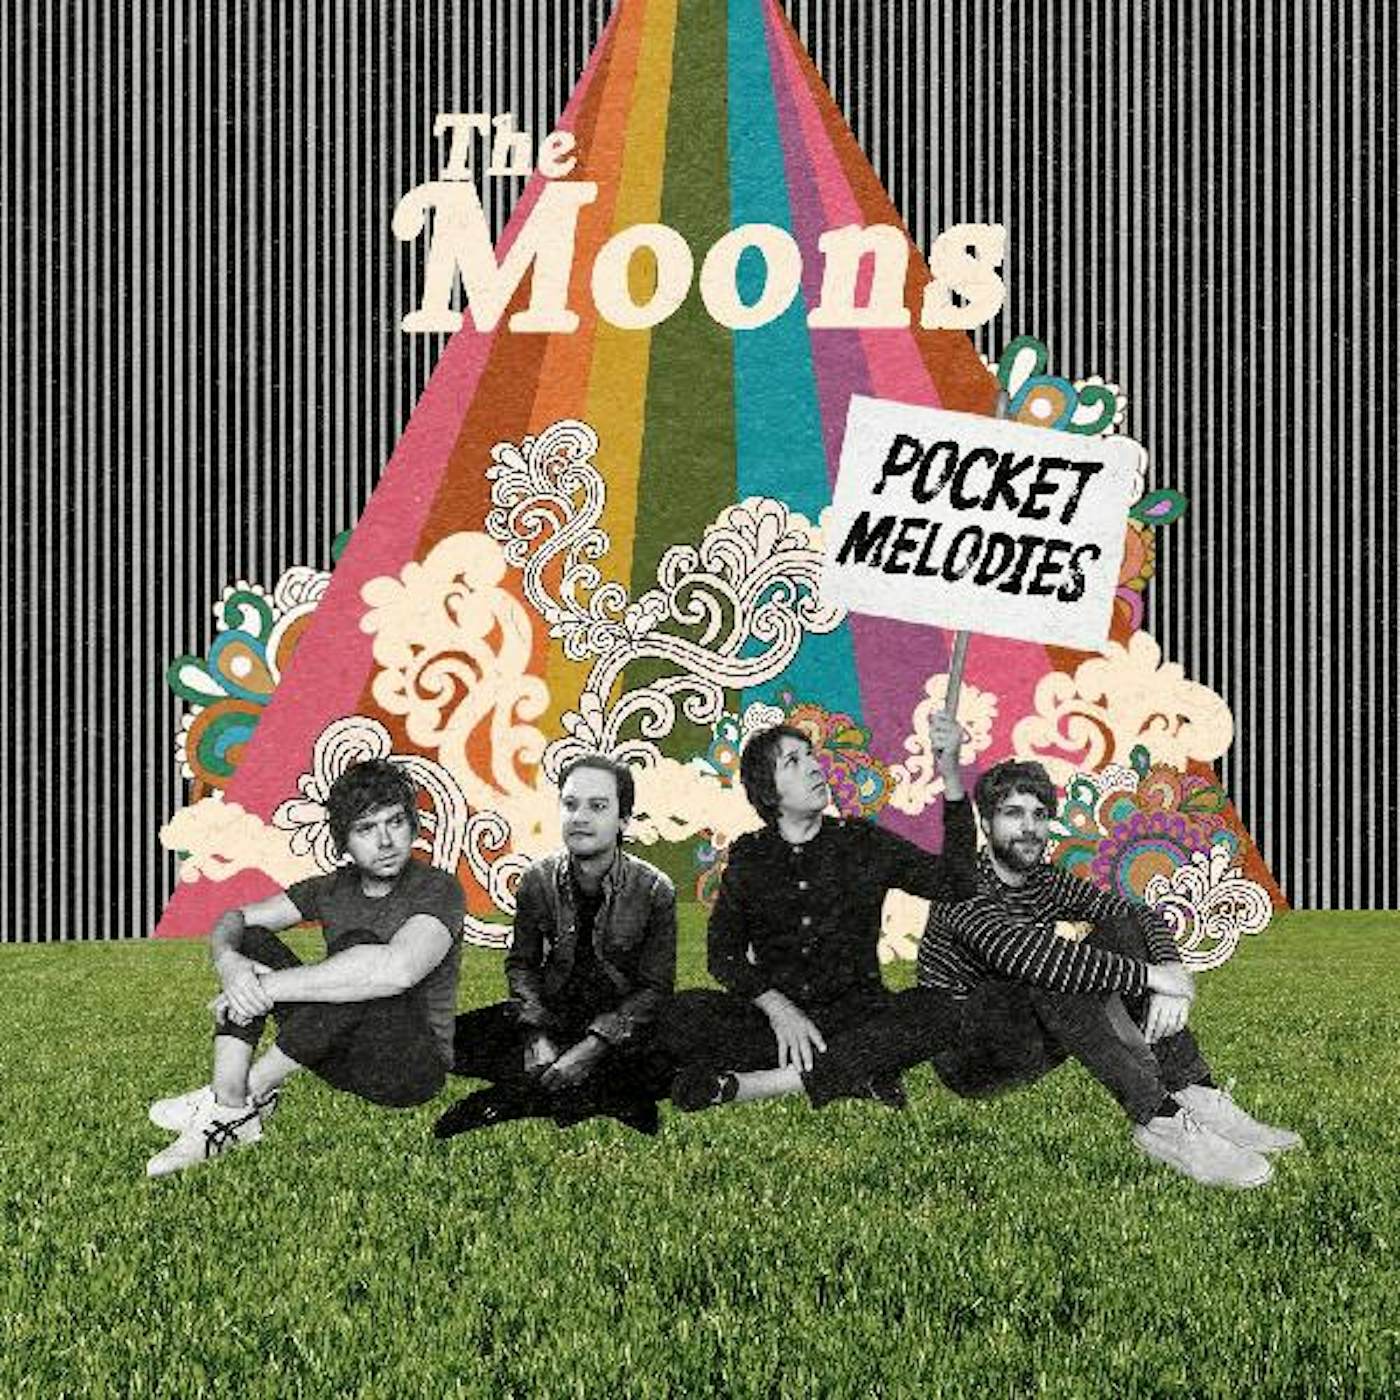 Moons Pocket Melodies CD